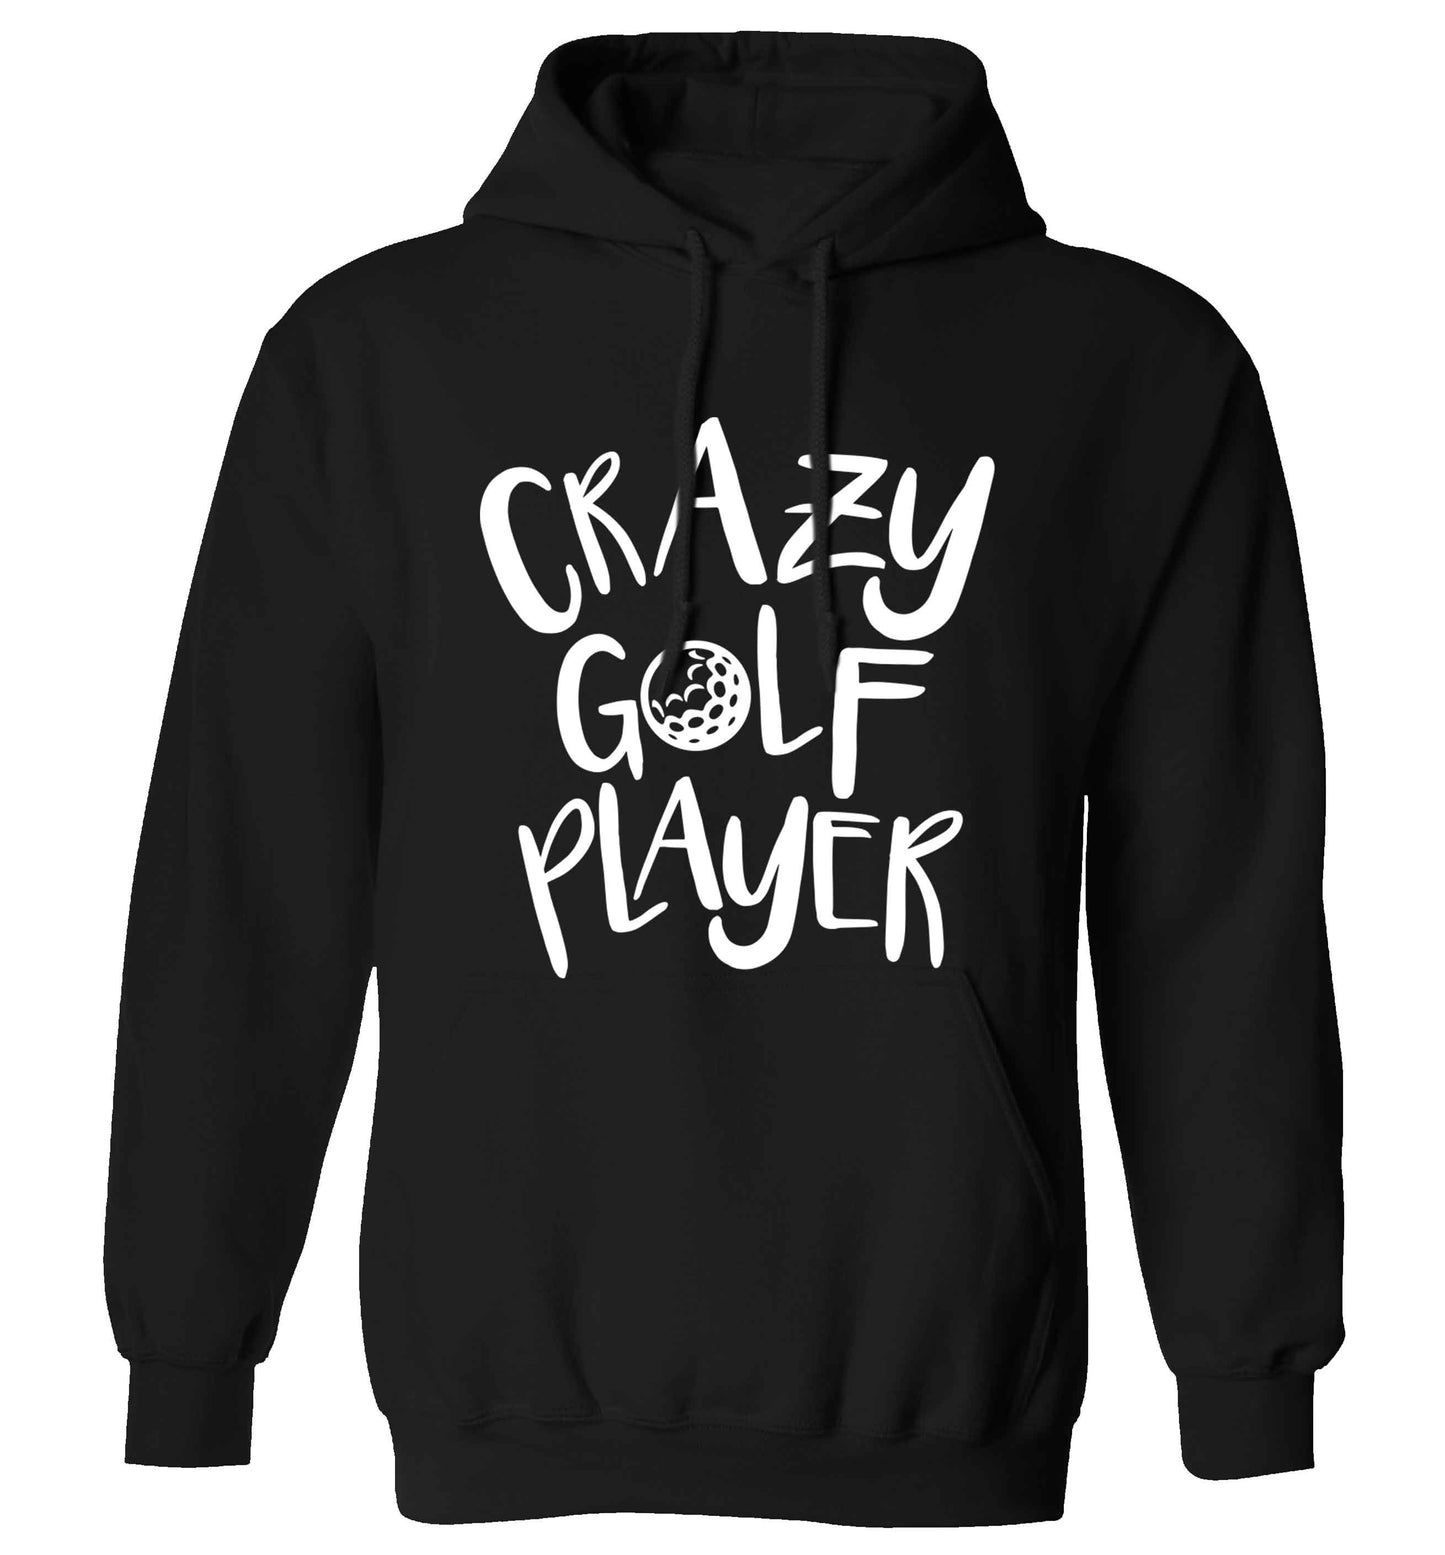 Crazy golf player adults unisex black hoodie 2XL